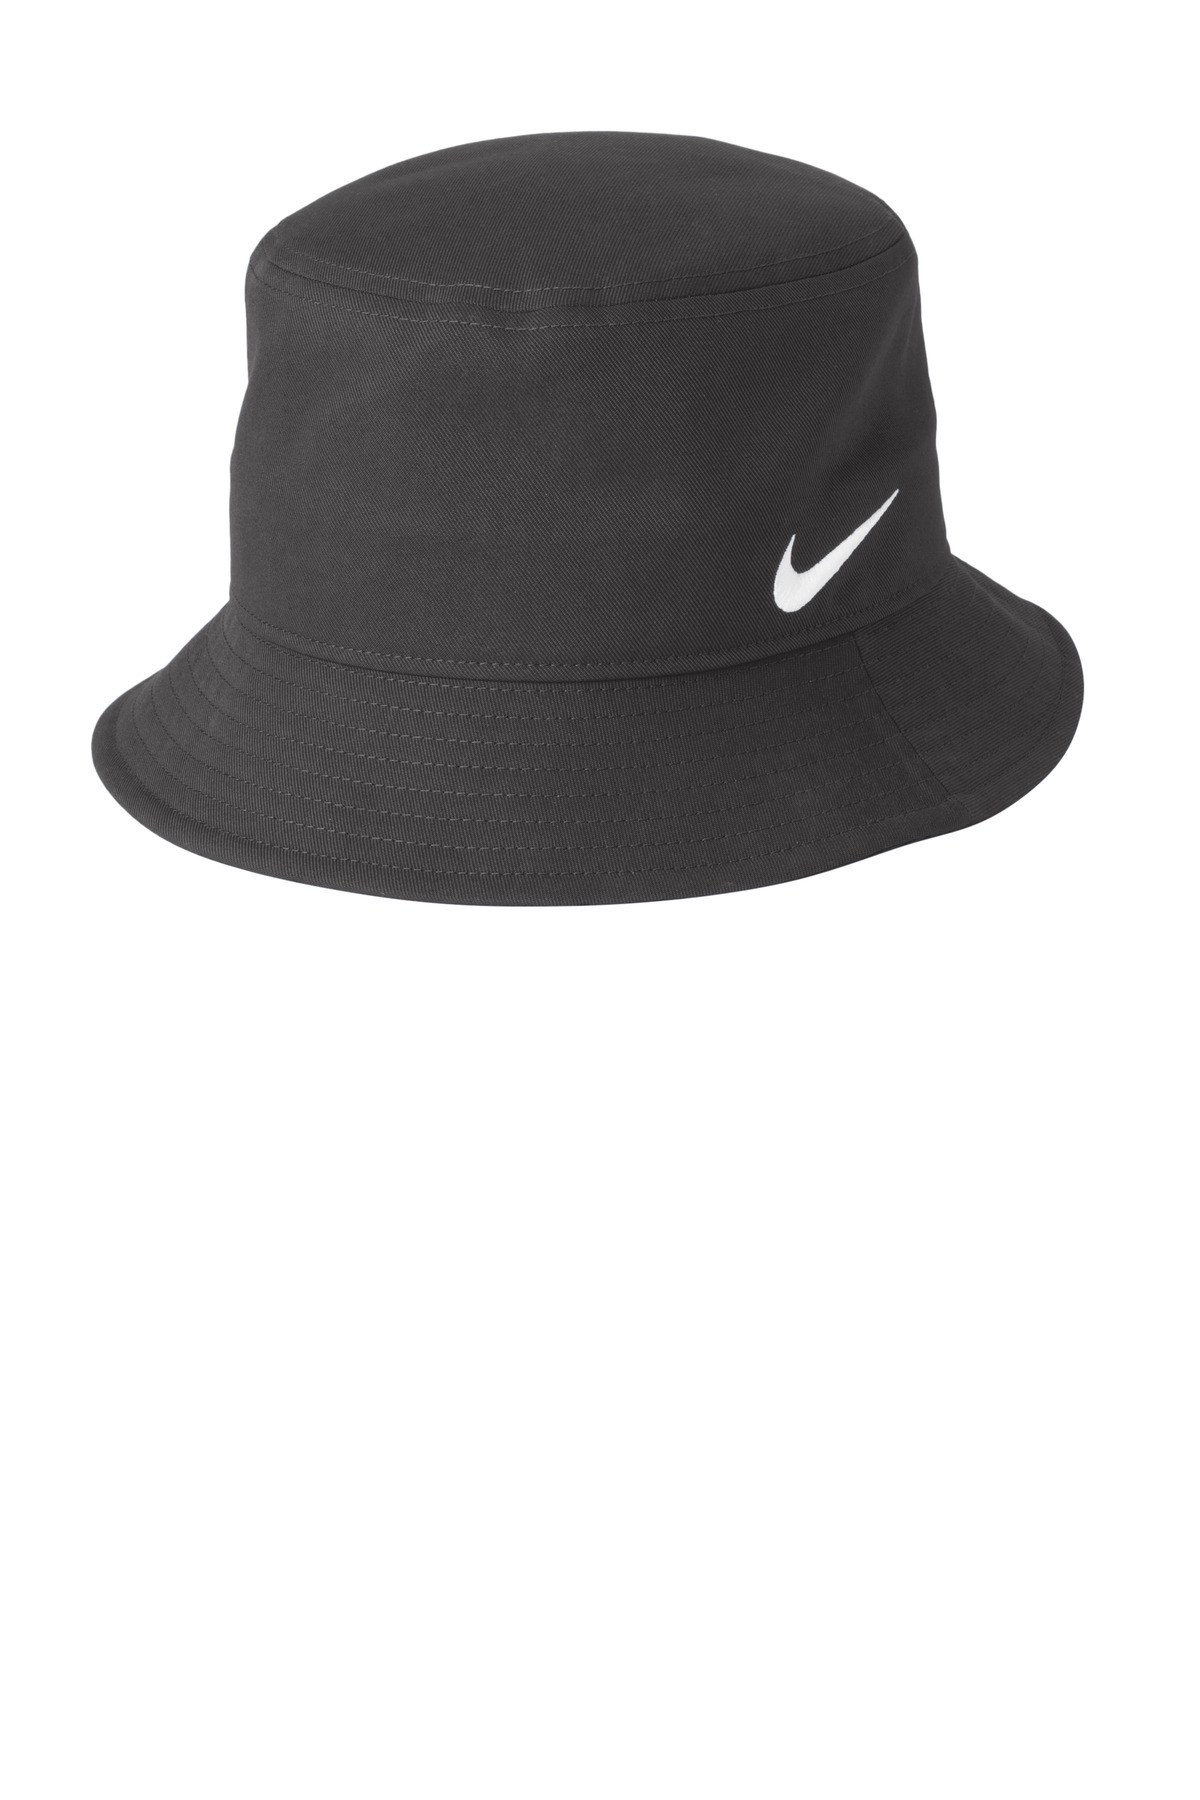 Nike Swoosh Bucket Hat-